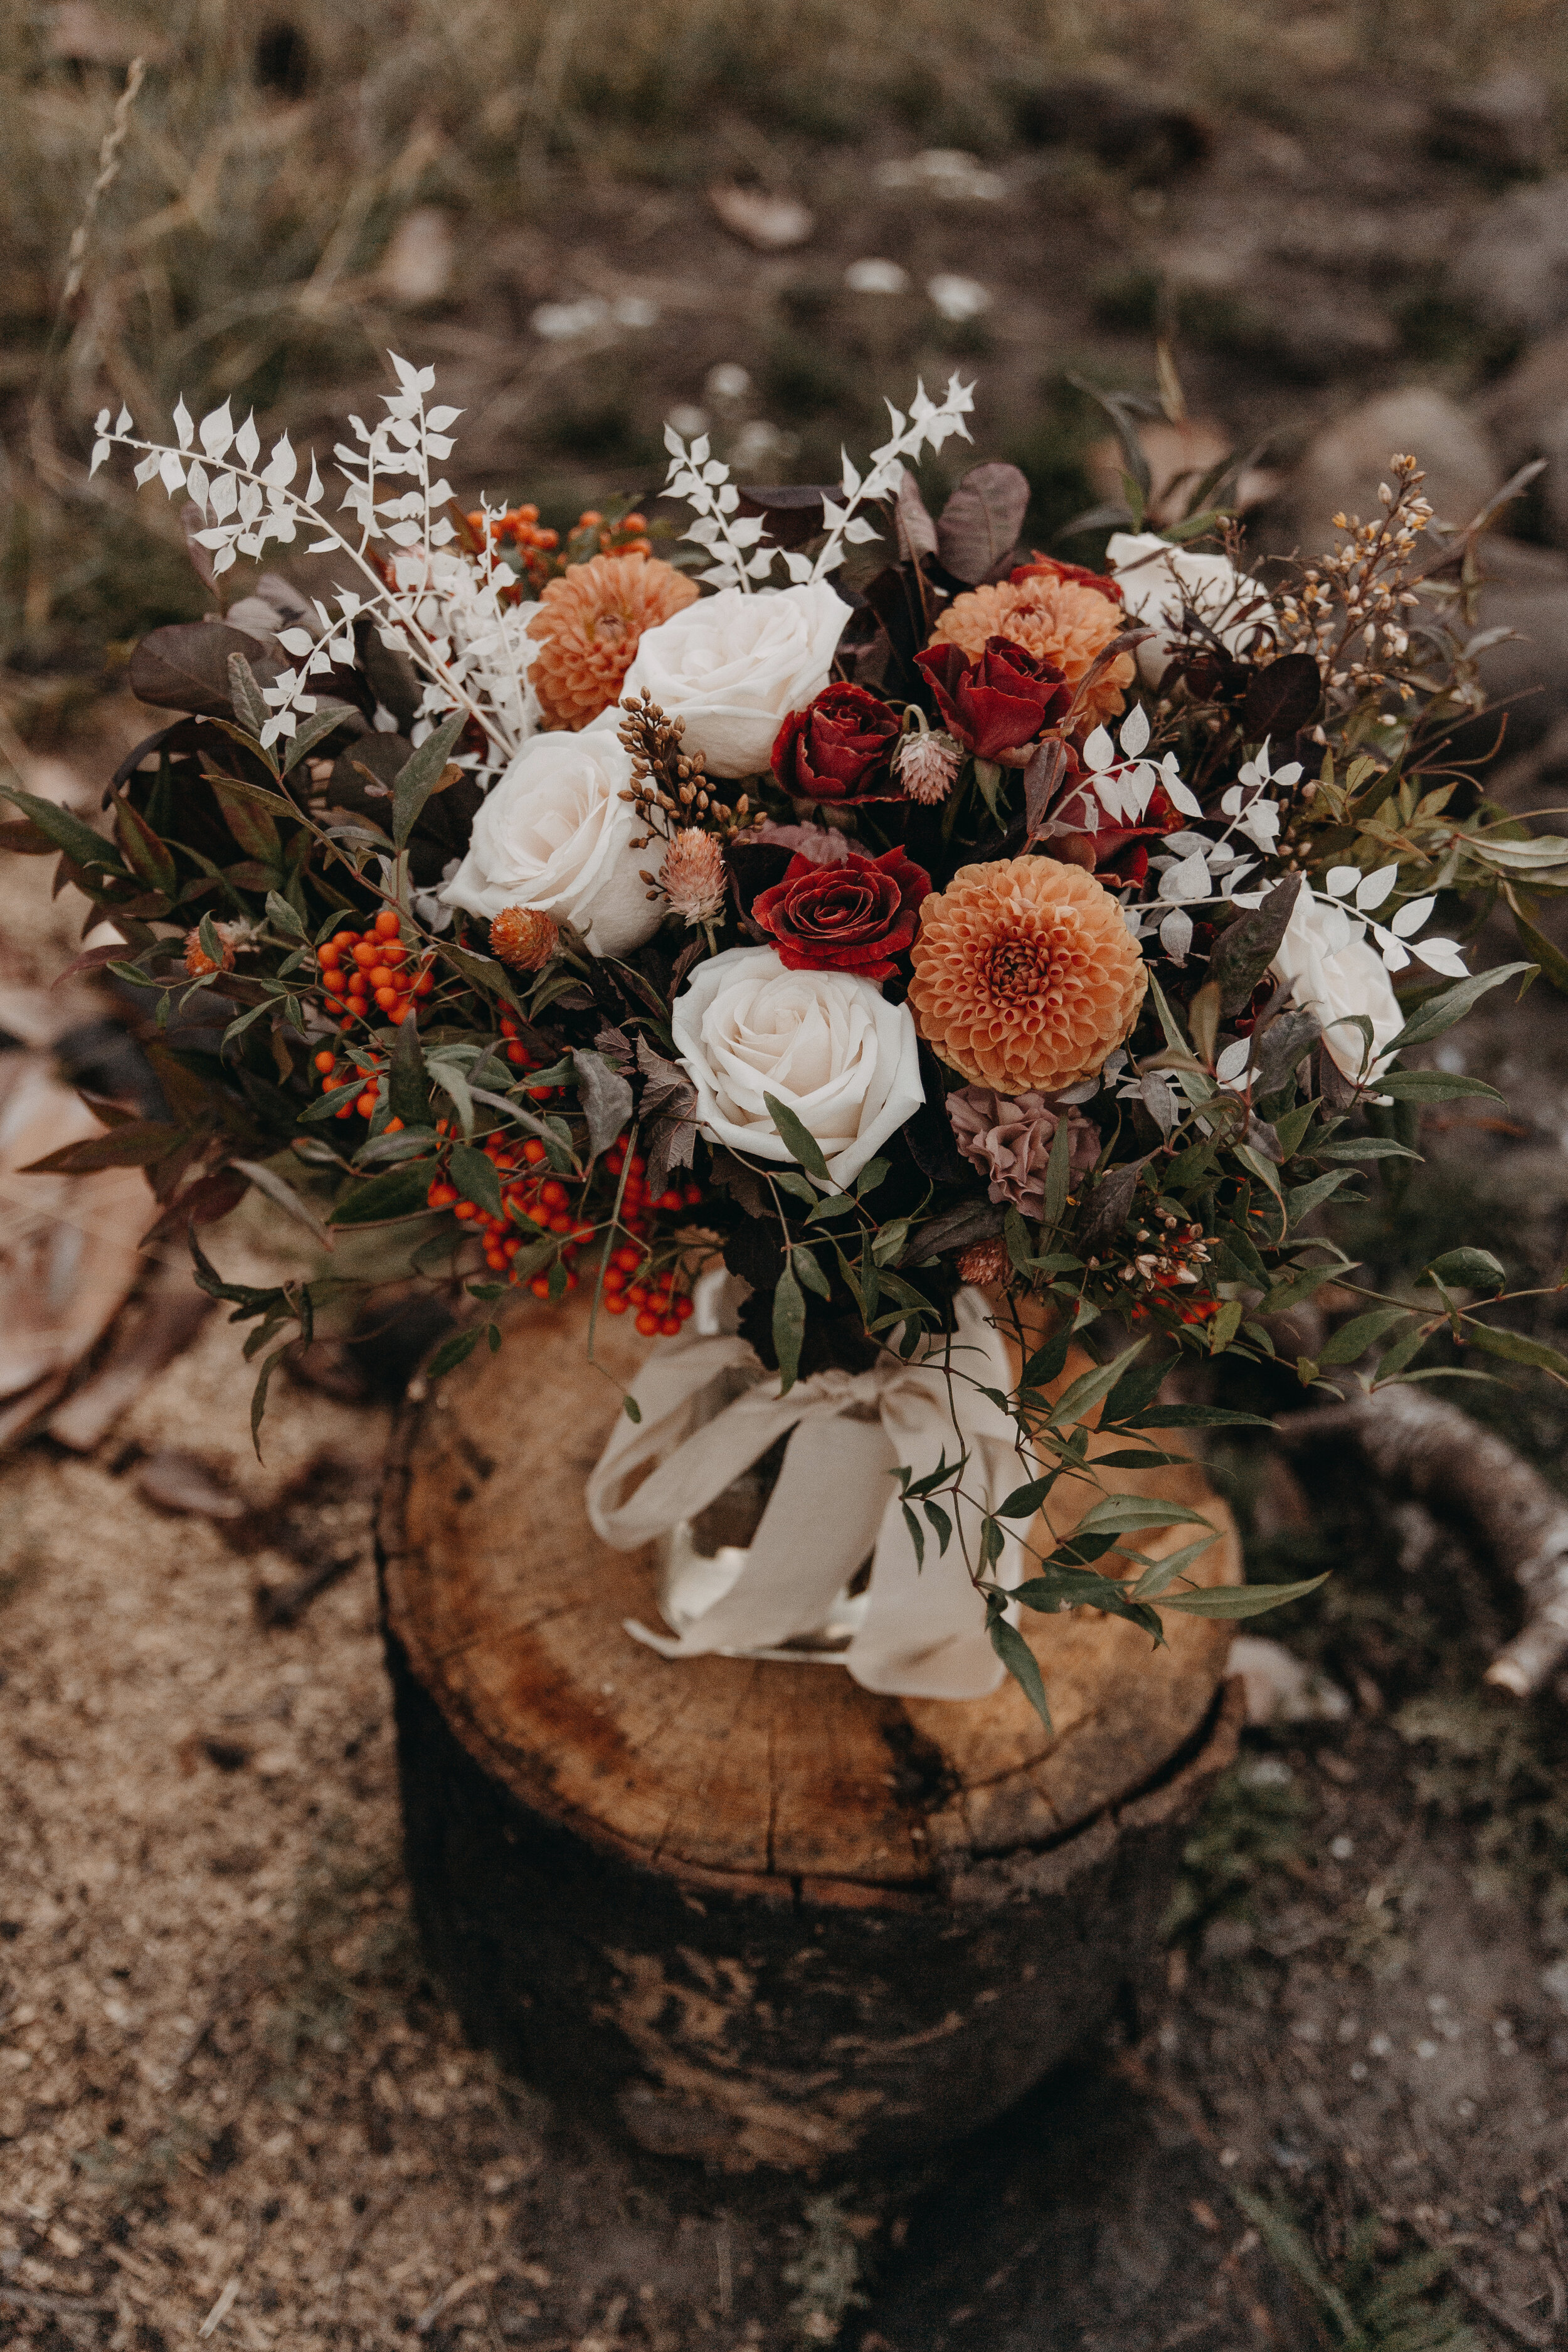 Autumn Bridal Editorial | Southern California Wedding Photographer